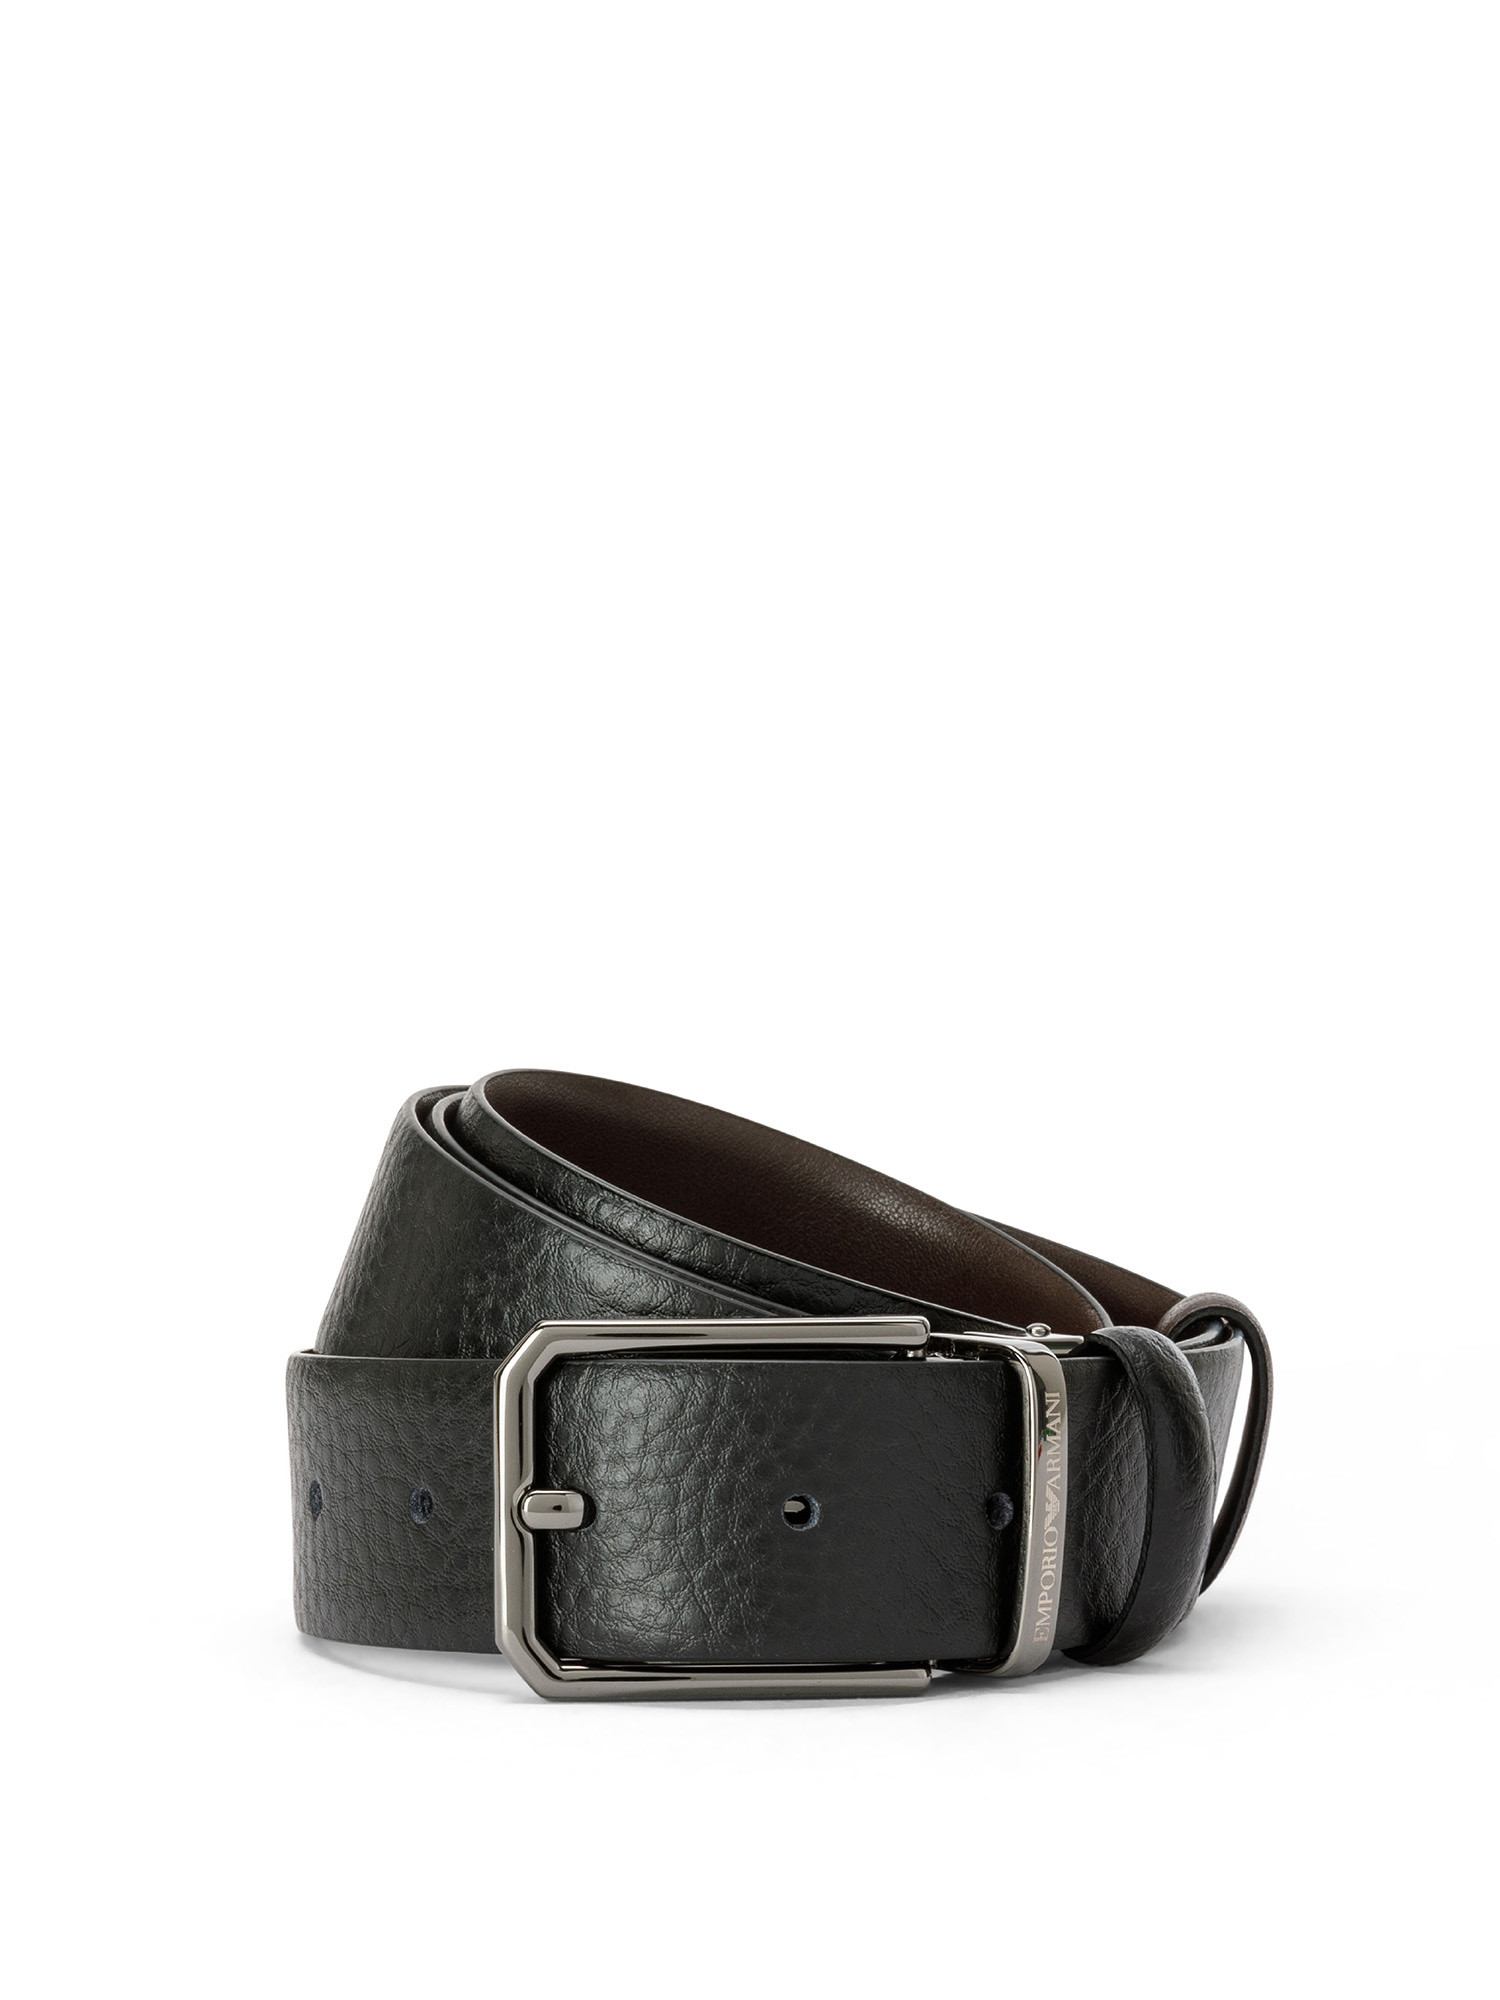 Emporio Armani - Reversible leather belt, Black, large image number 0